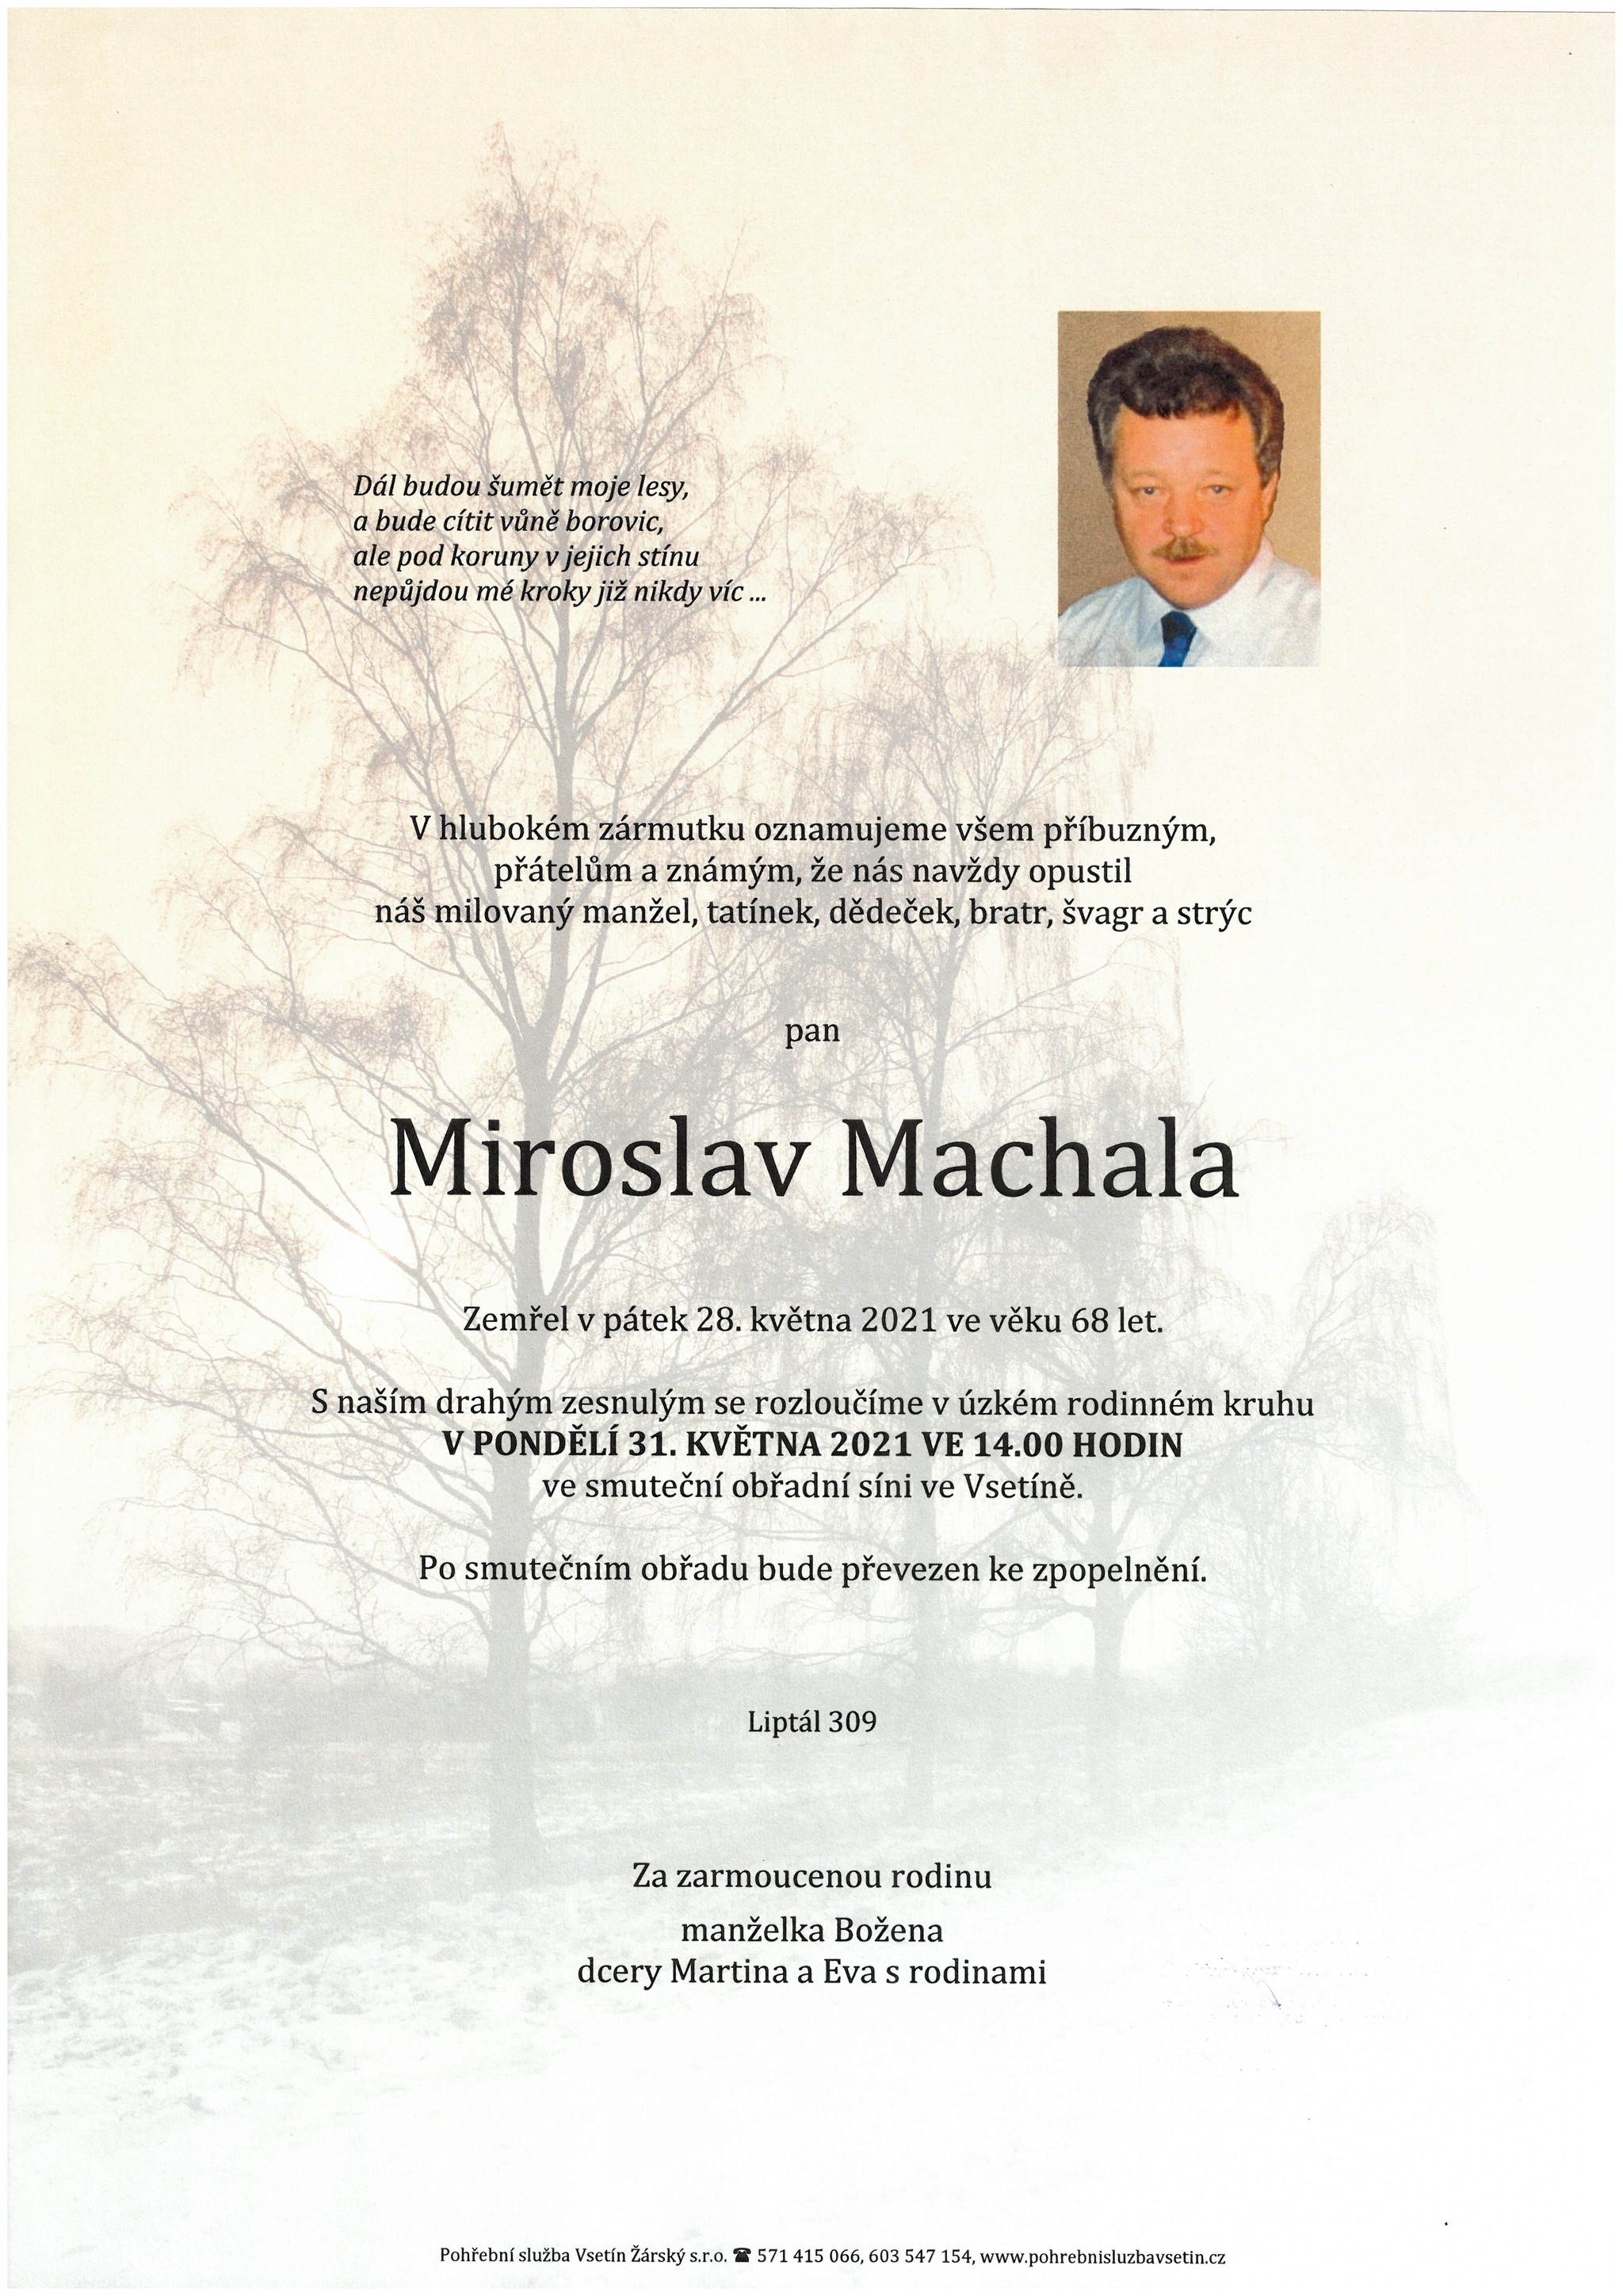 Miroslav Machala